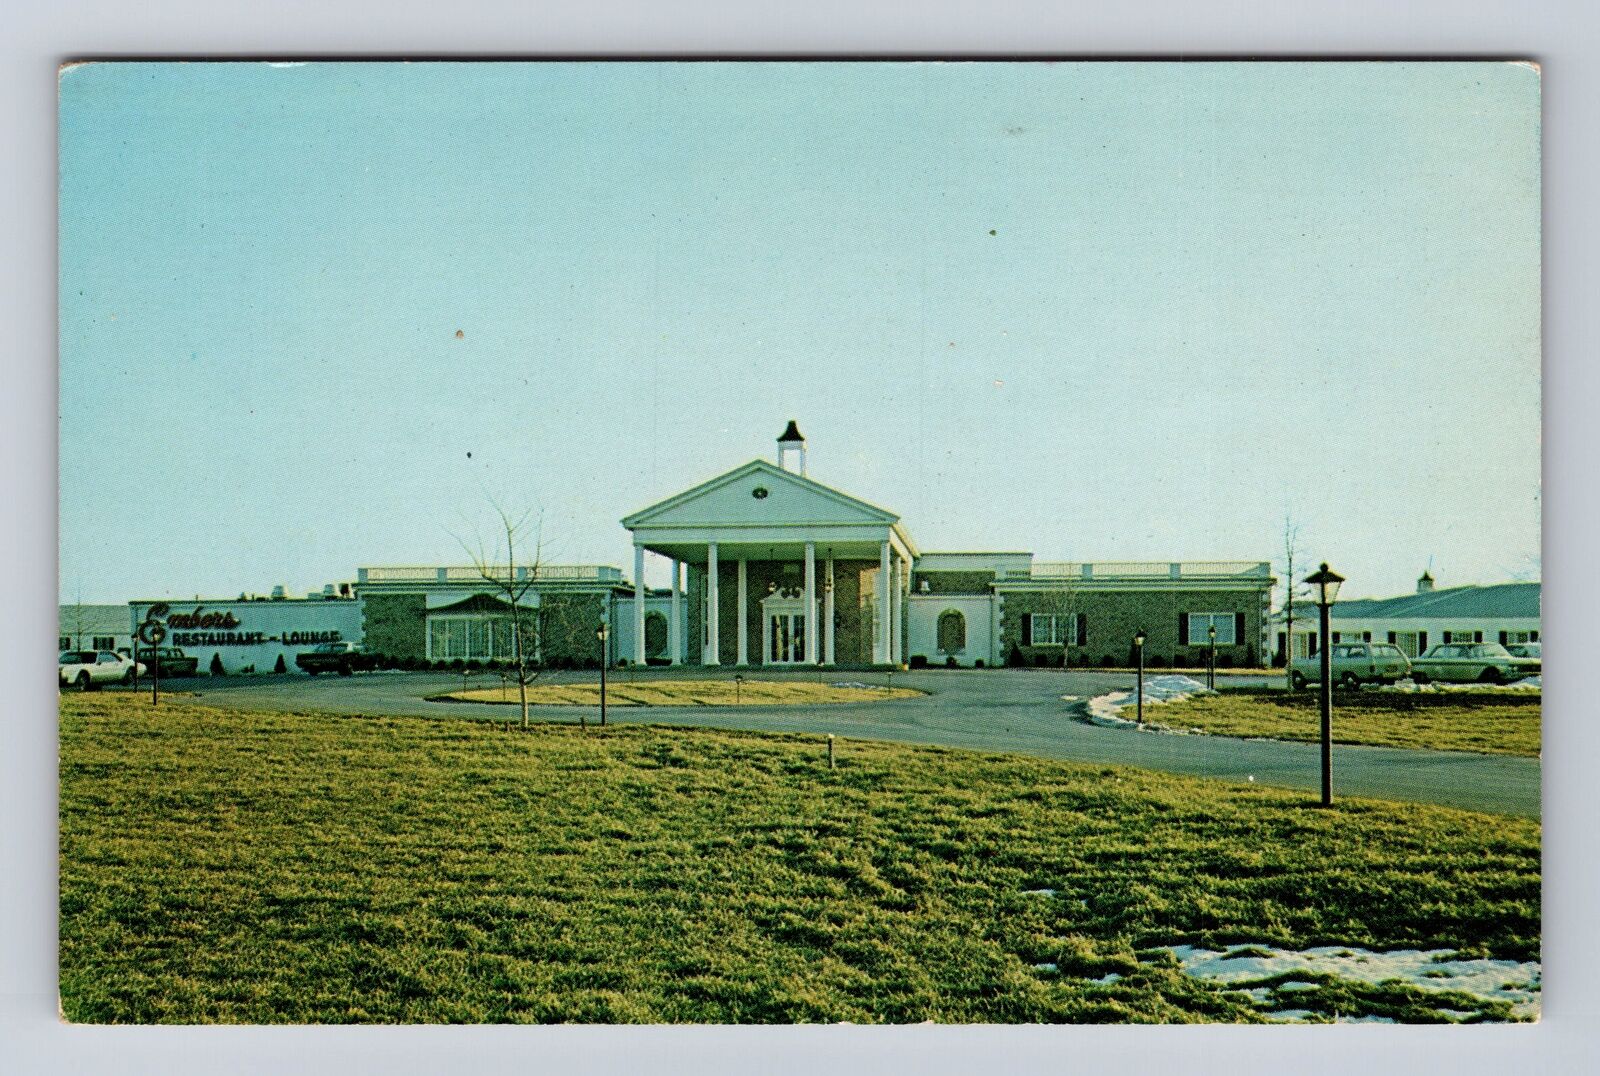 Carlisle PA-Pennsylvania, Quality Court Motel, Advertisement, Vintage Postcard